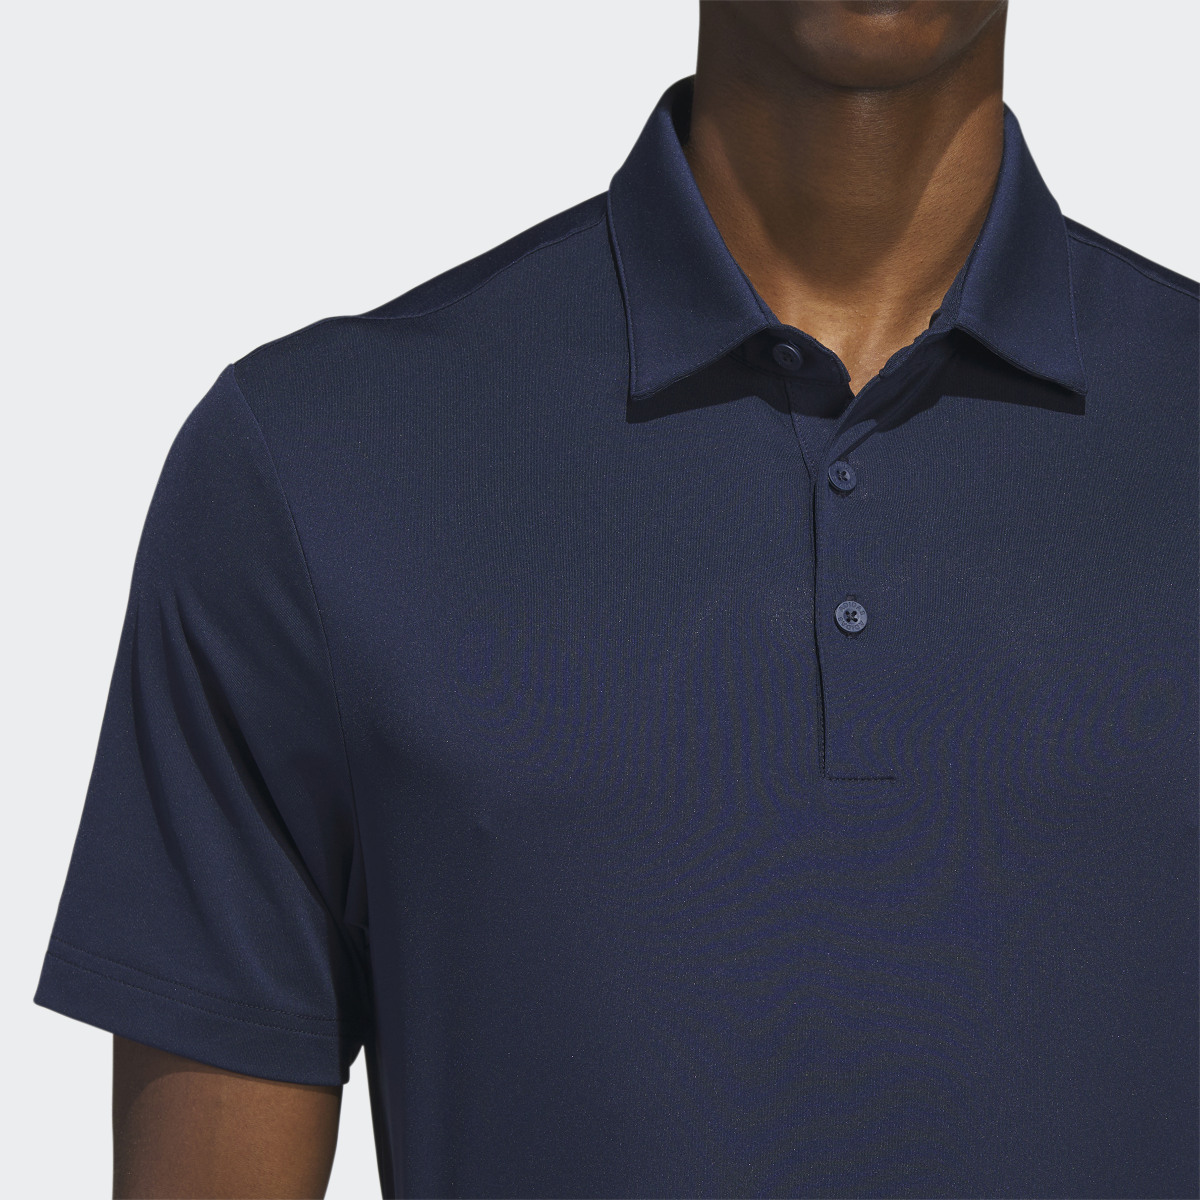 Adidas Ultimate365 Solid Polo Shirt. 7